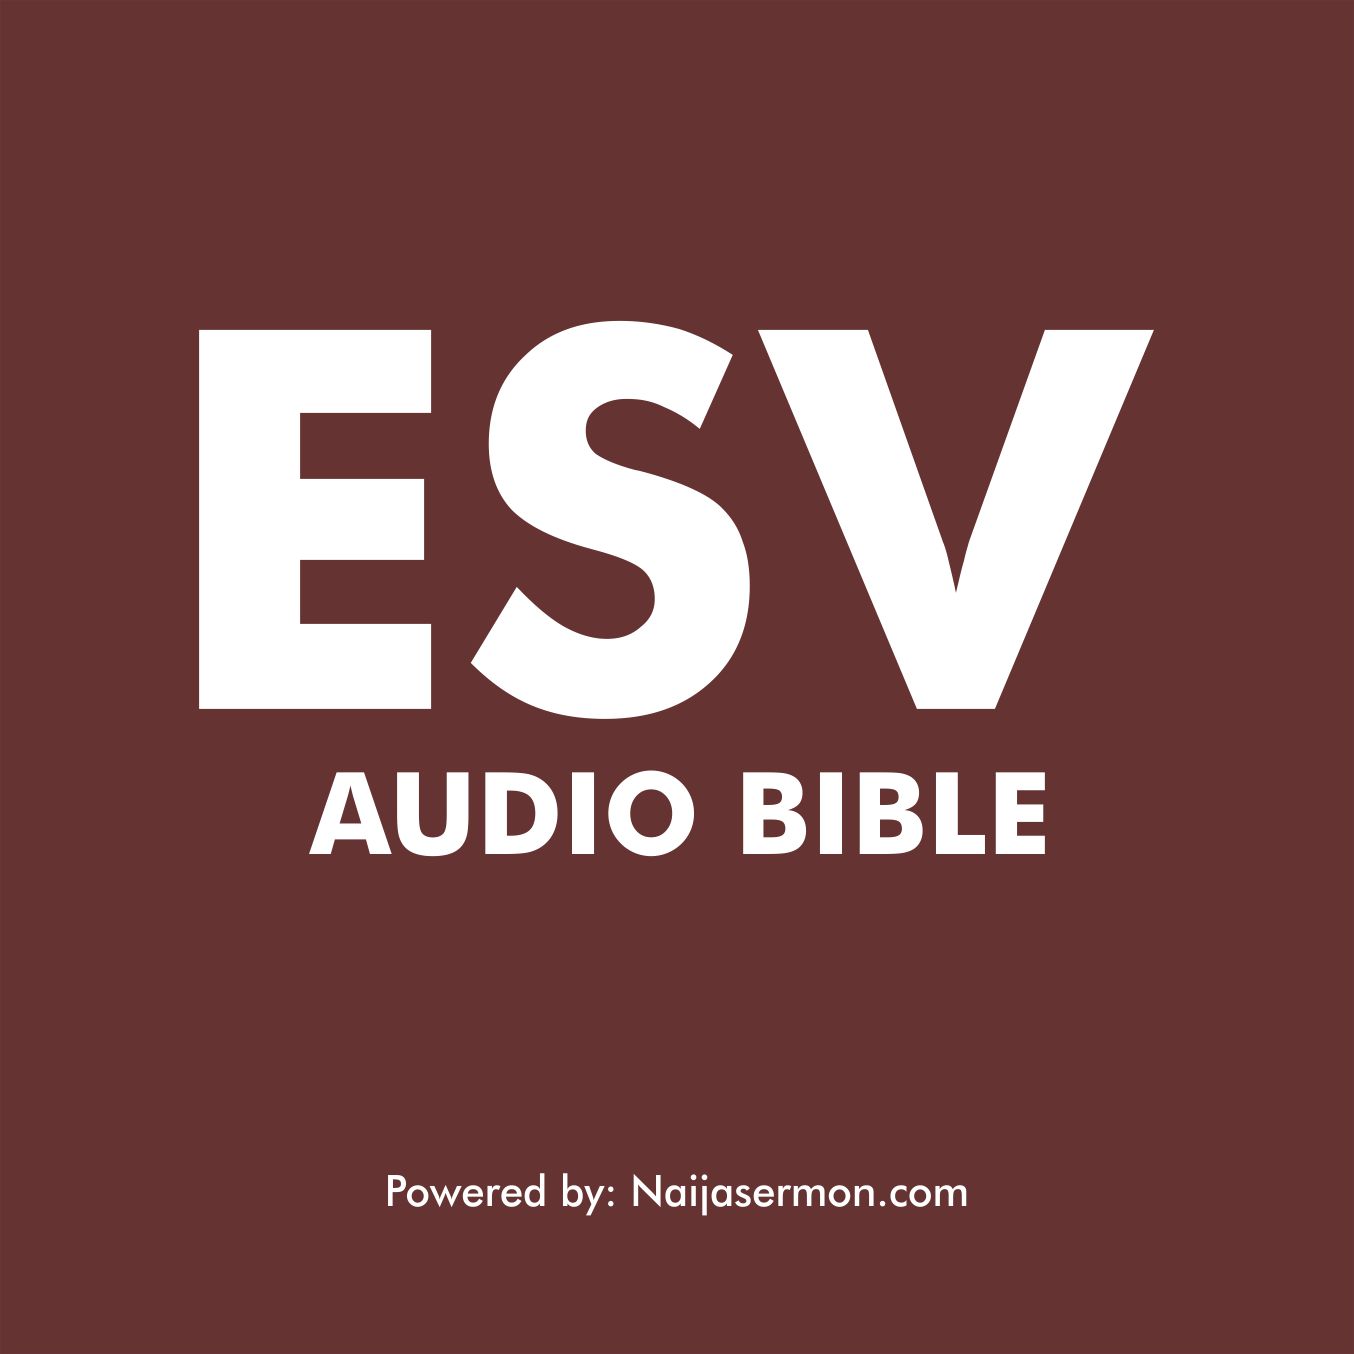 [Free] Download English Standard Version (ESV) Audio Bible MP3 - Dramatized 20